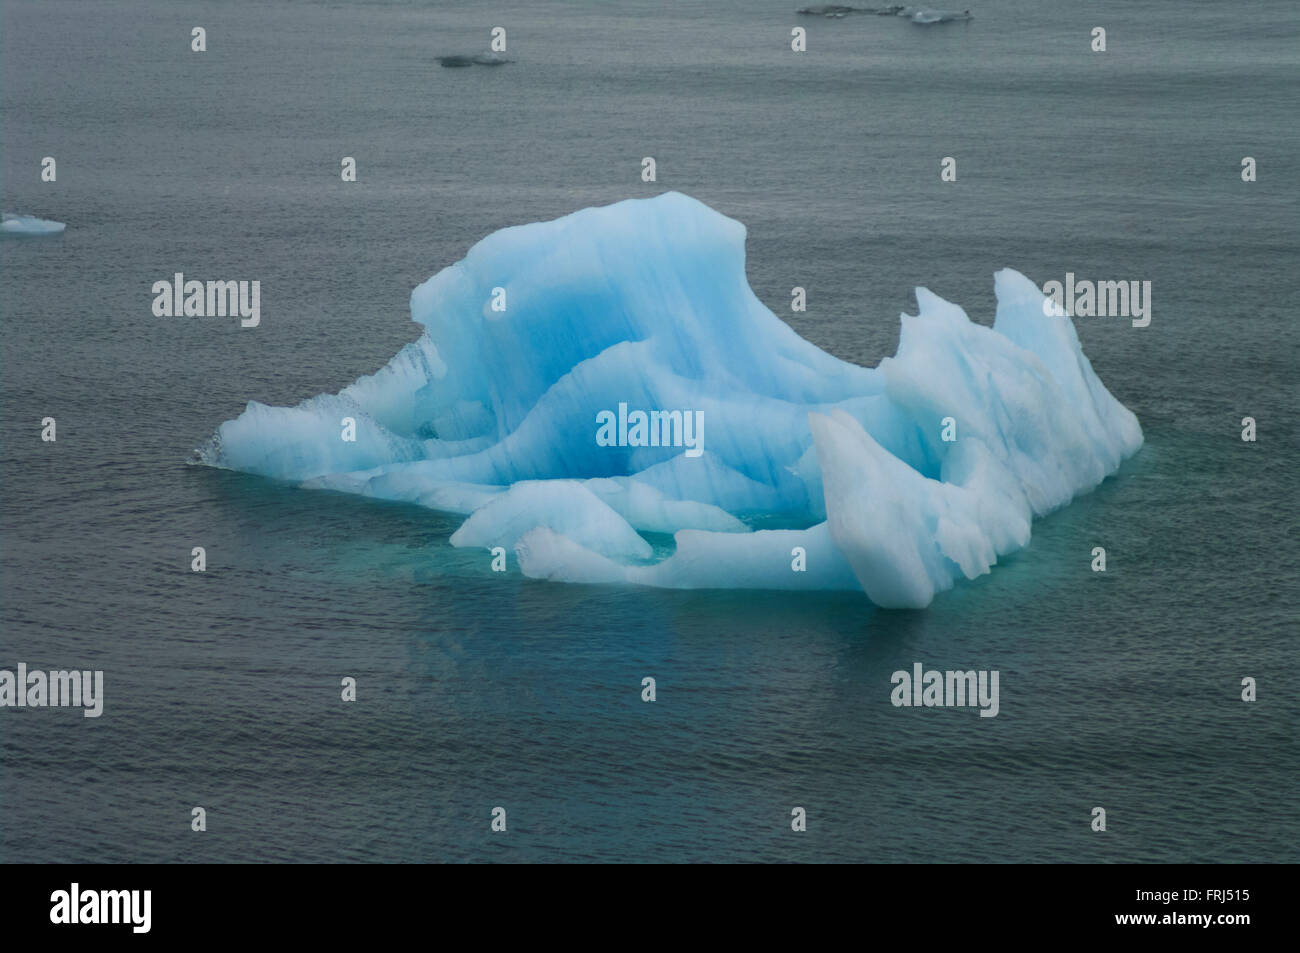 Blue iceberg in the water. Gulf of Alaska, Alaska, United States of America. Stock Photo